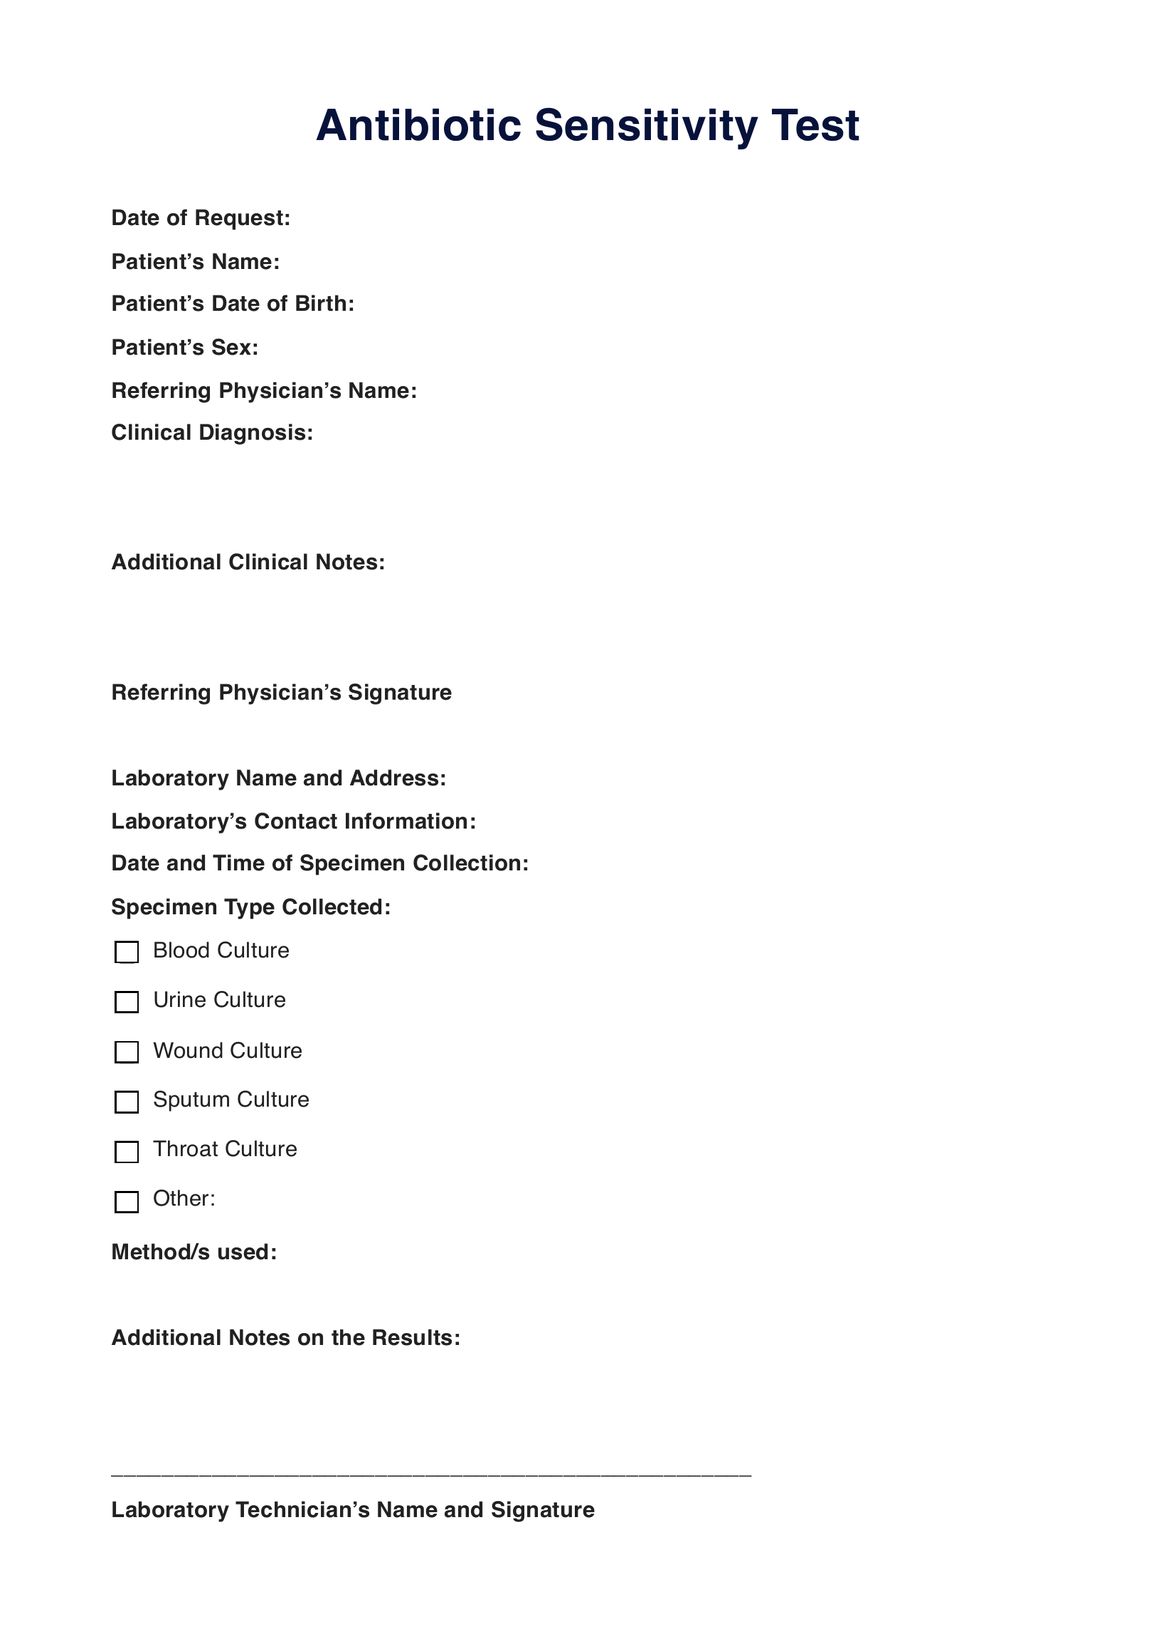 Antibiotic Sensitivity PDF Example